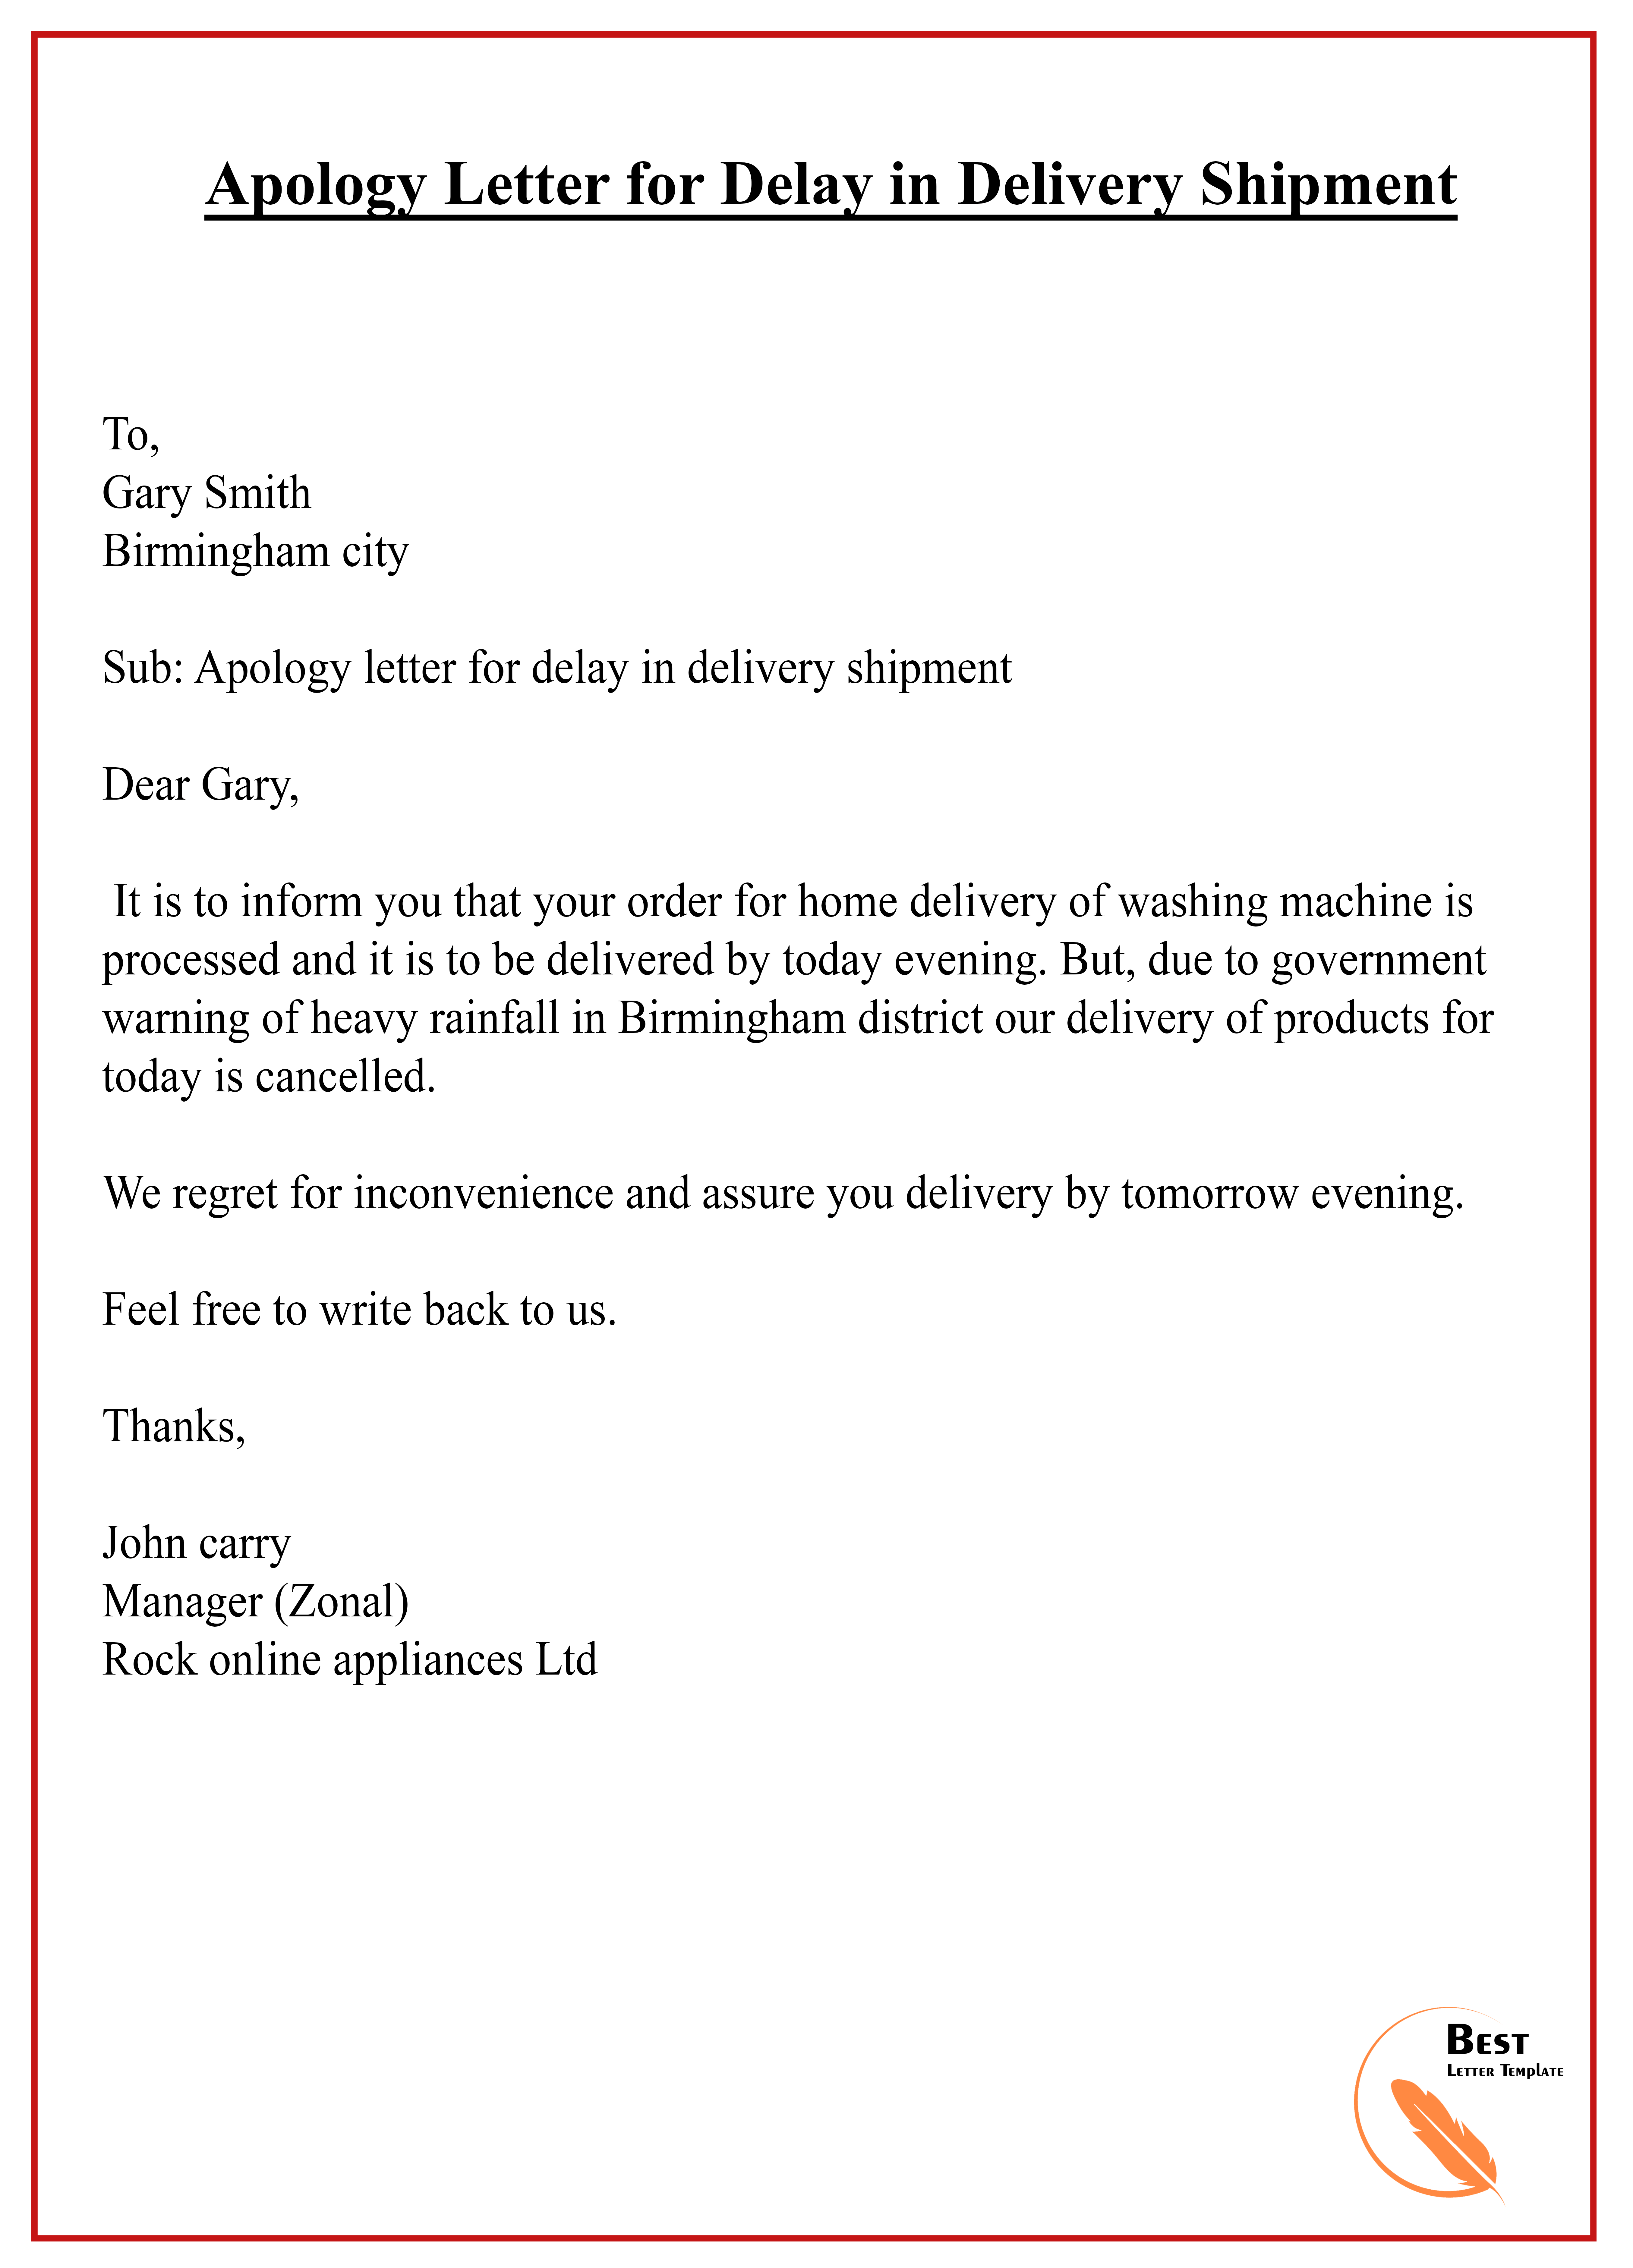 apology letter delay shipment